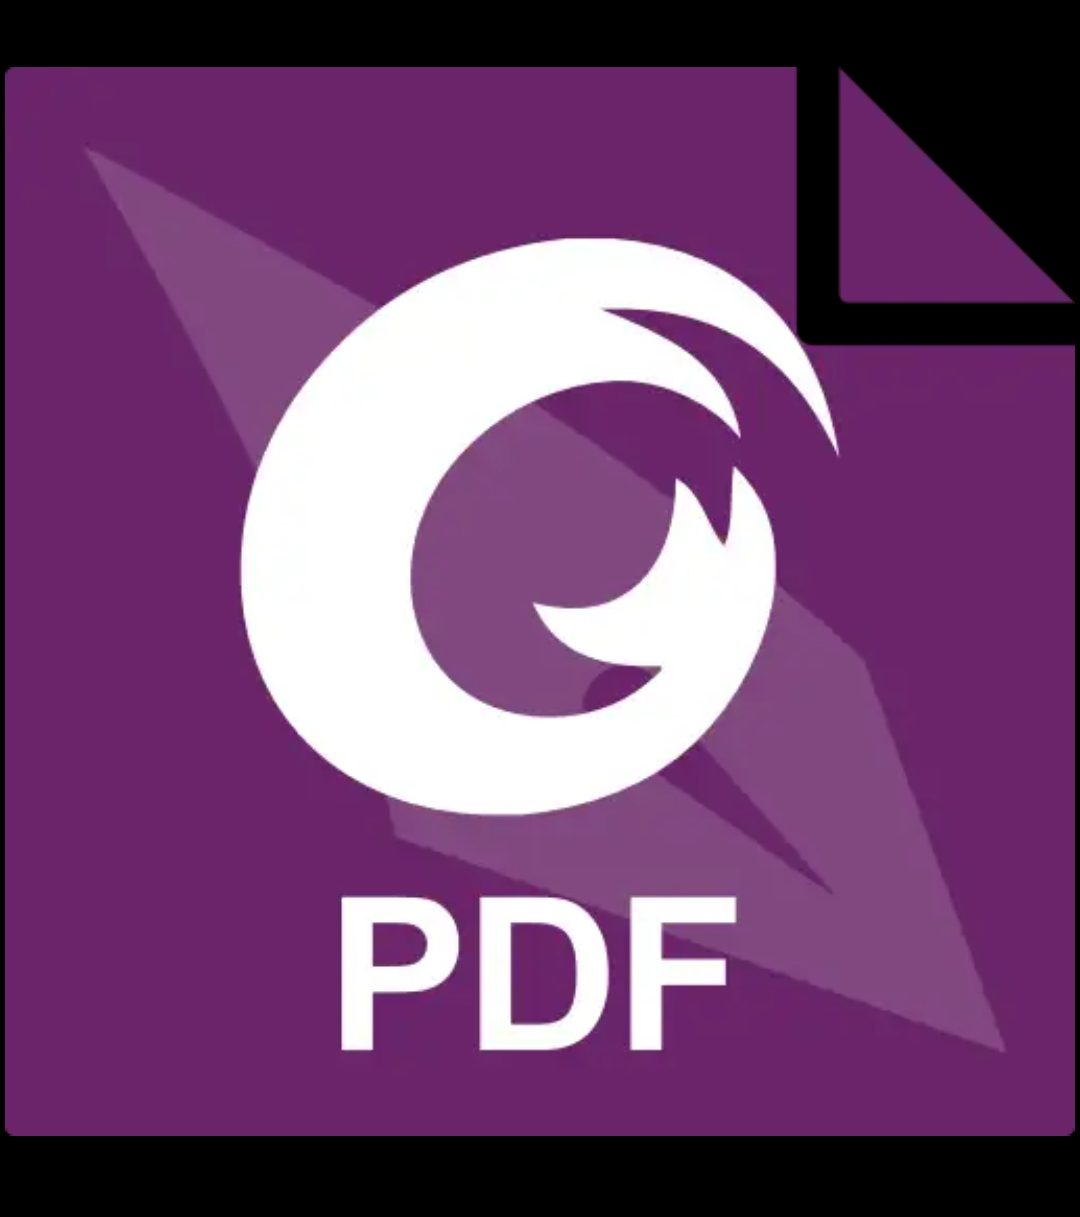 Foxit PDF Editor icon